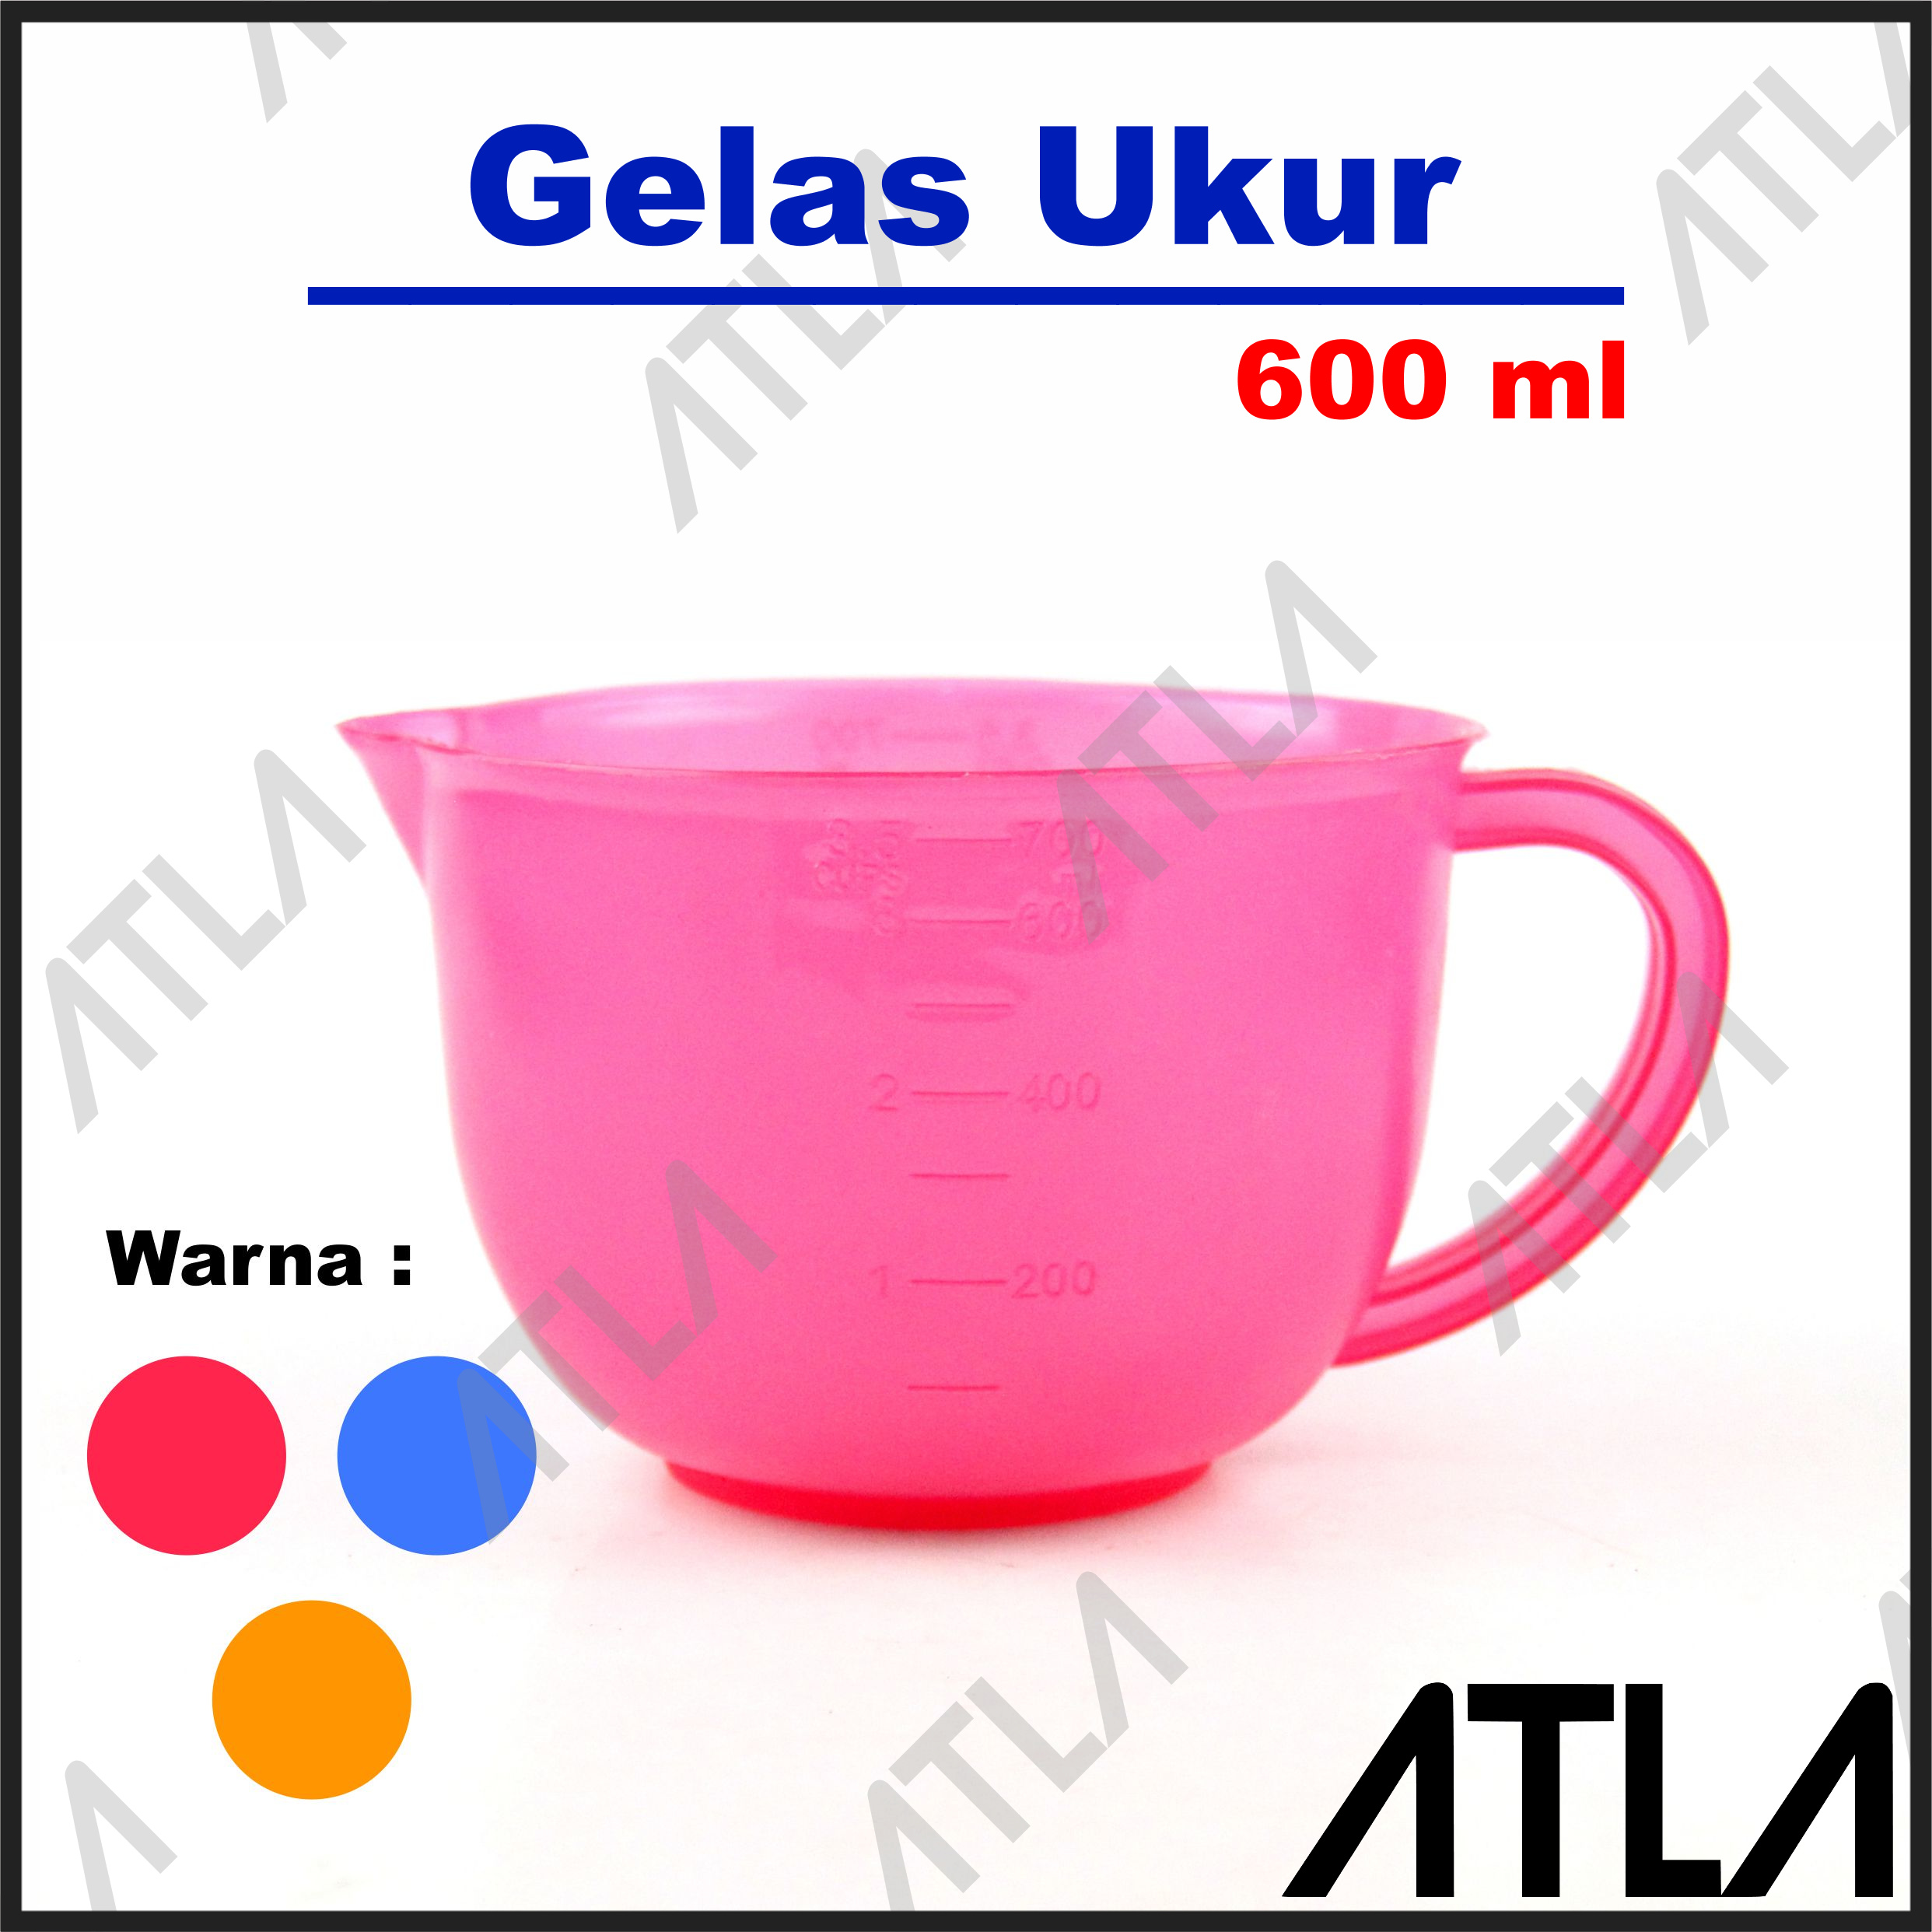 Gelas Takaran 600 Ml Warna Ukur Takar Air Measuring Cup Plastik Cairan Nutrisi 600ml At137 3241